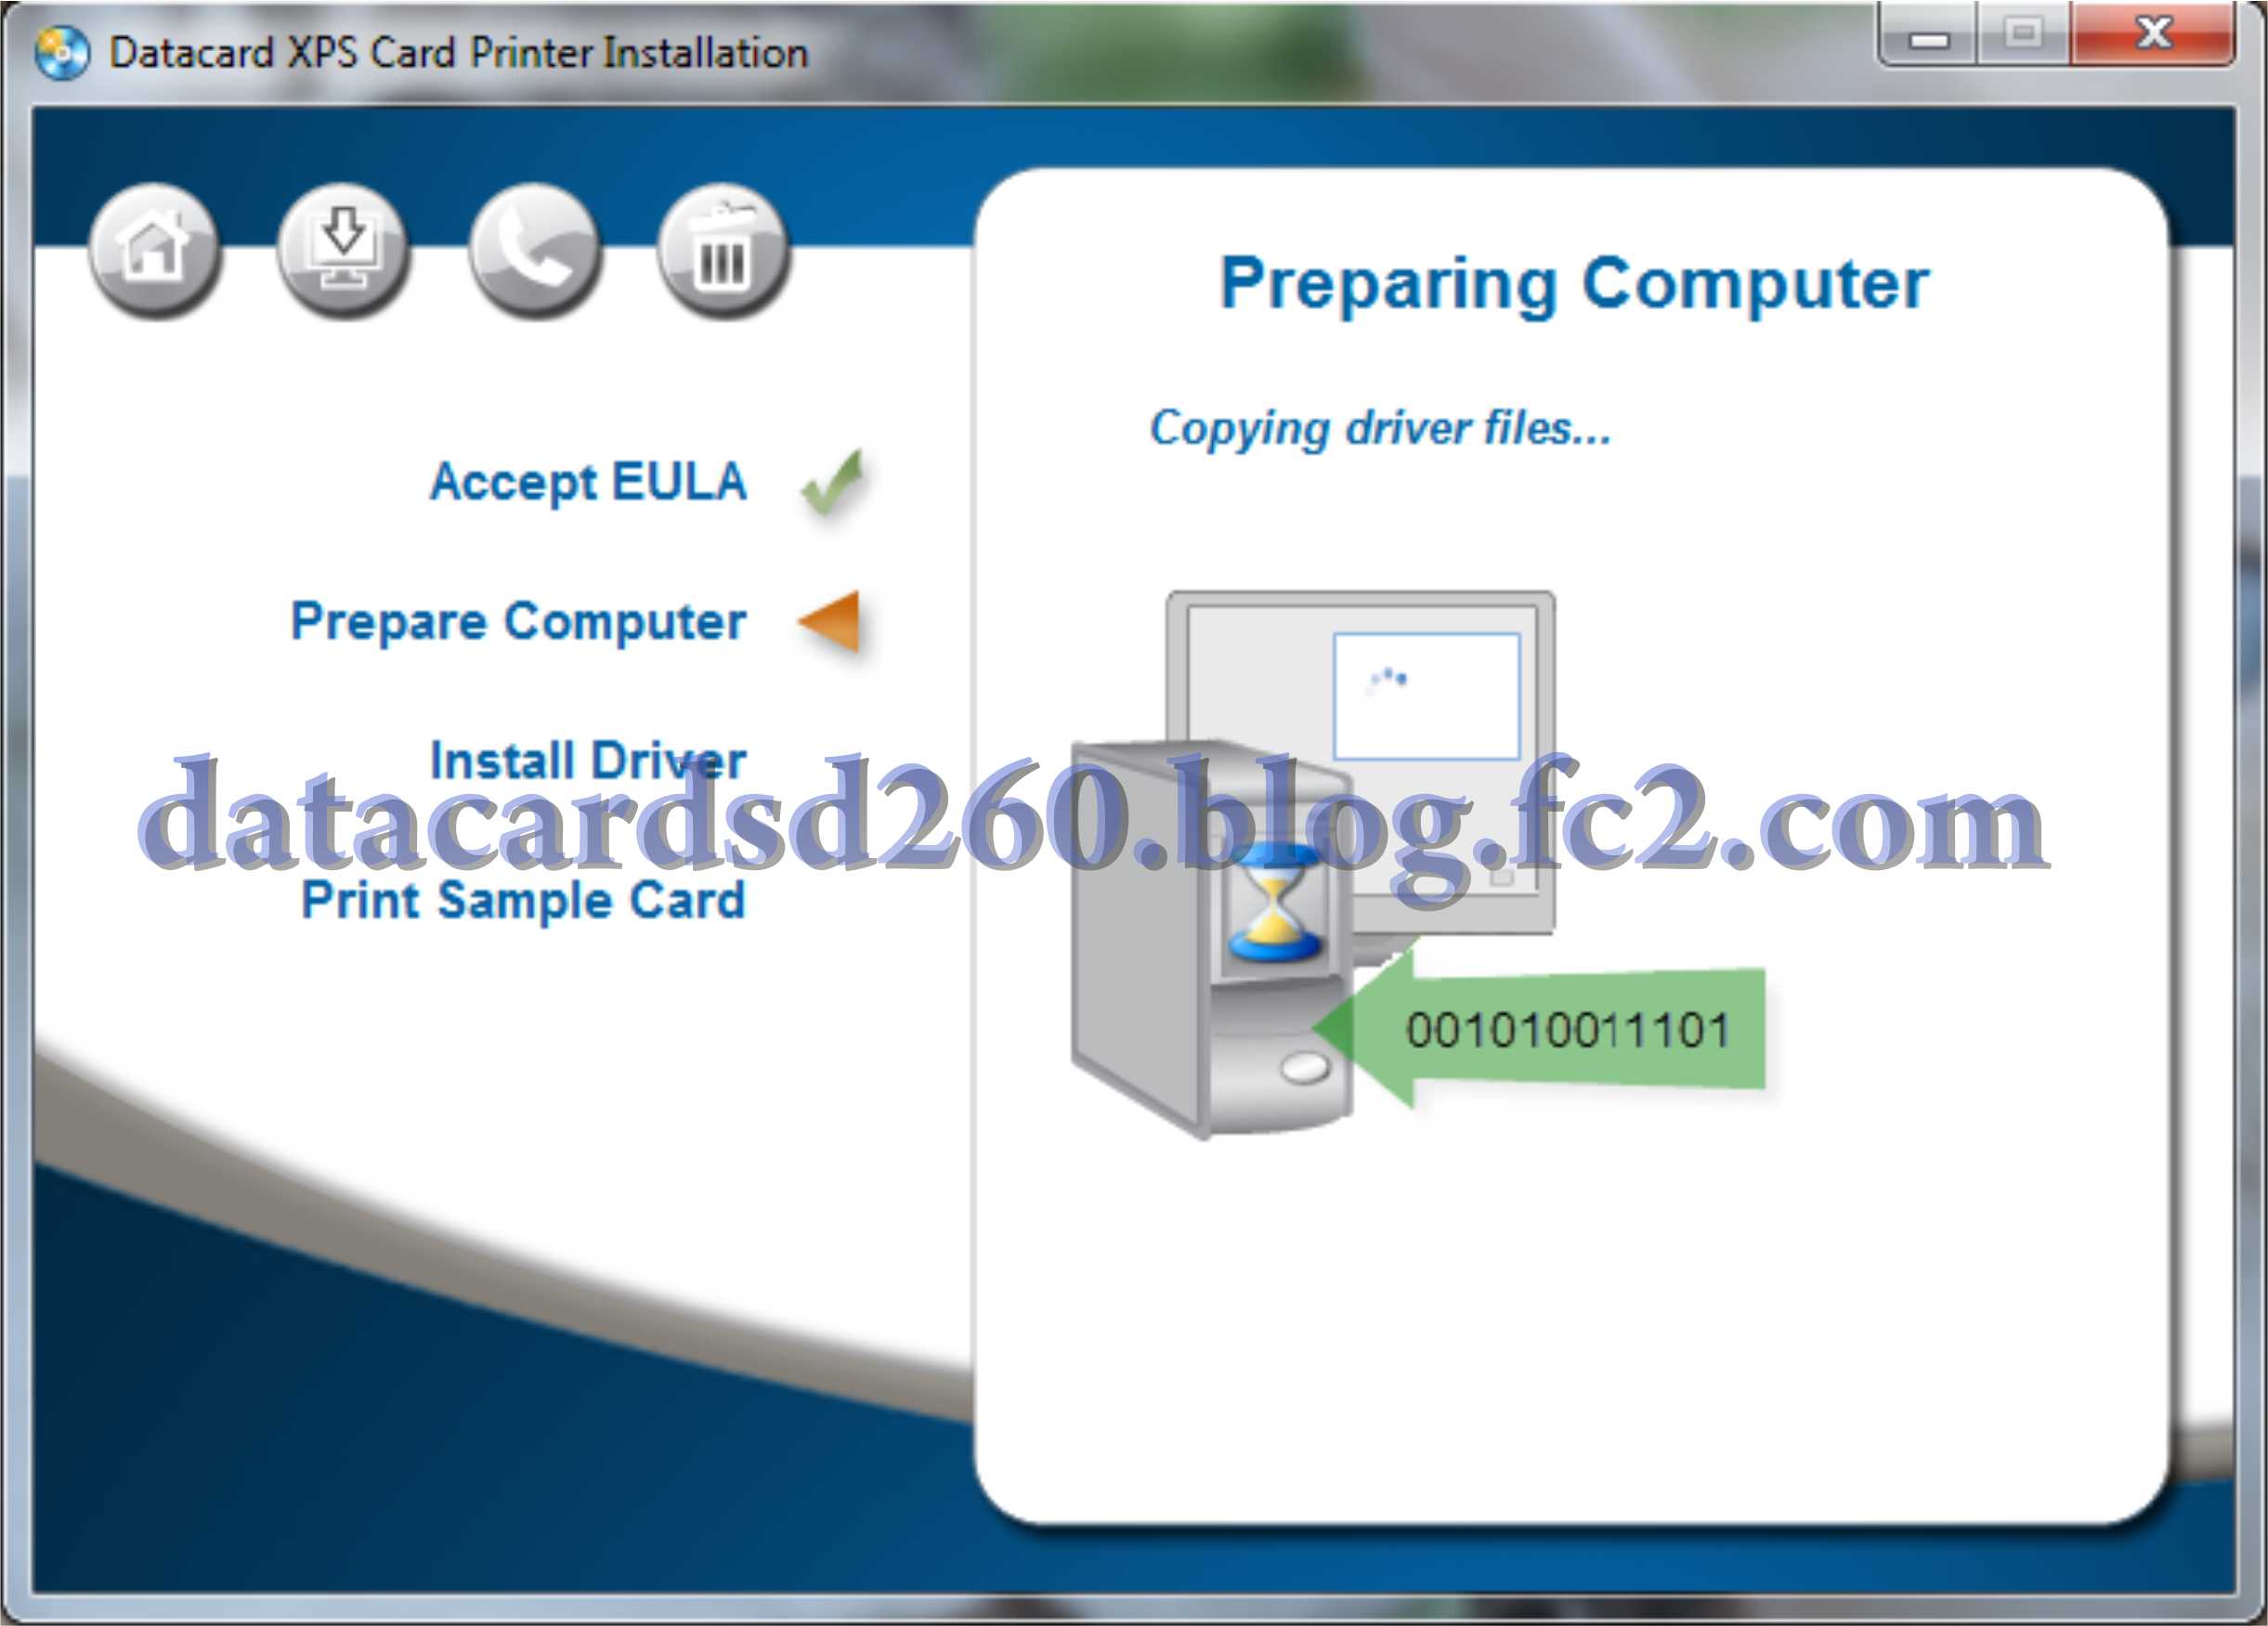 datacard sd260 software download